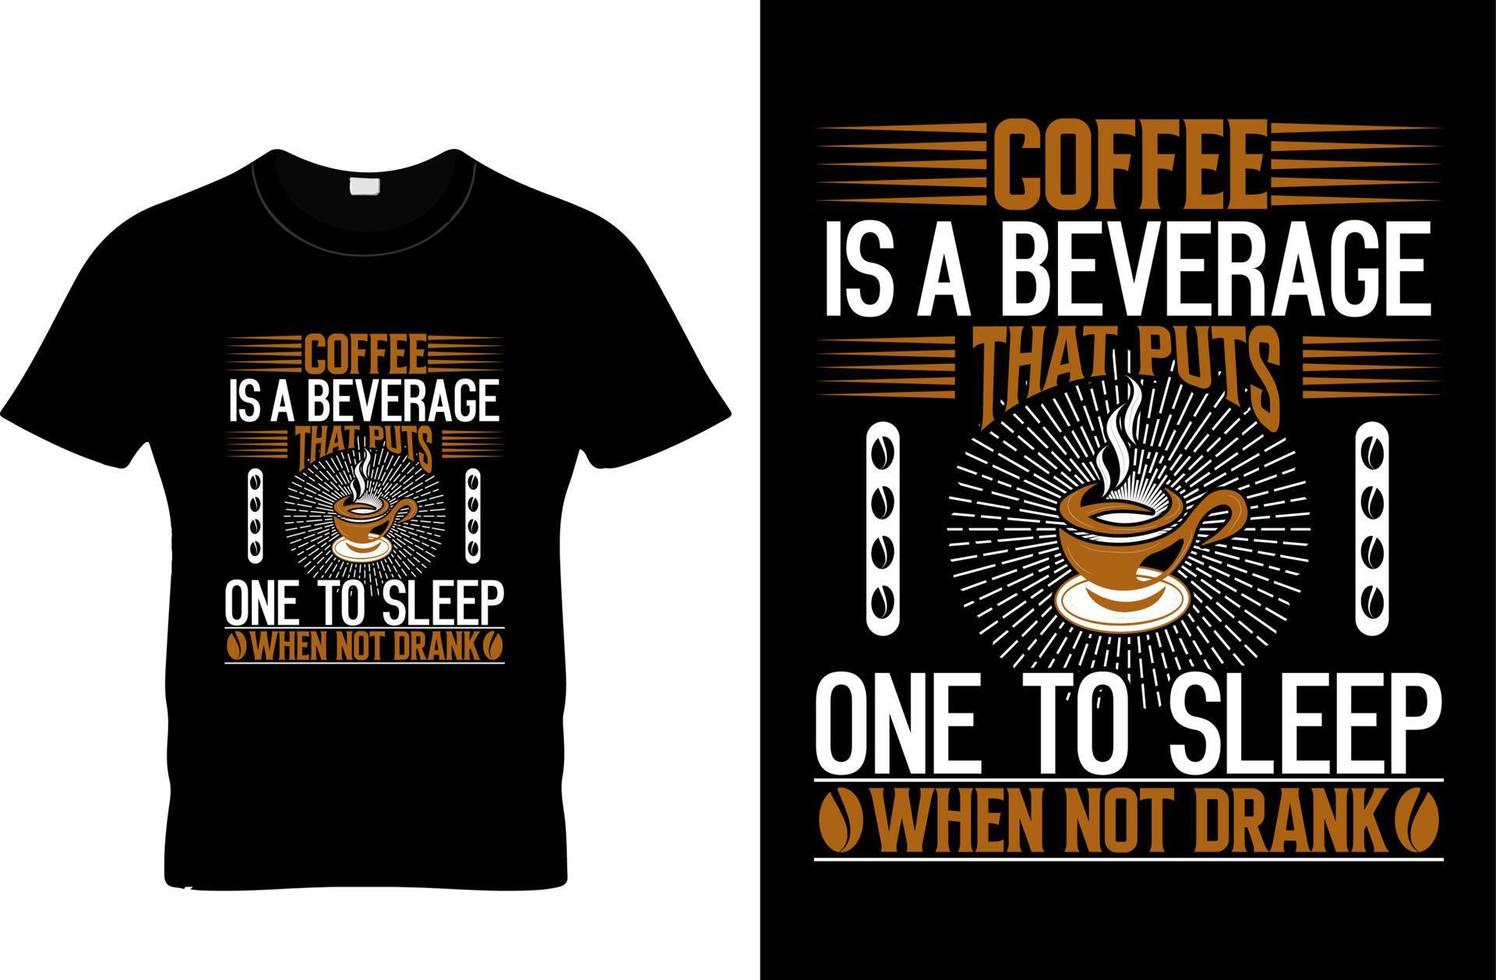 impresión de tipografía de diseño de camiseta de café vector